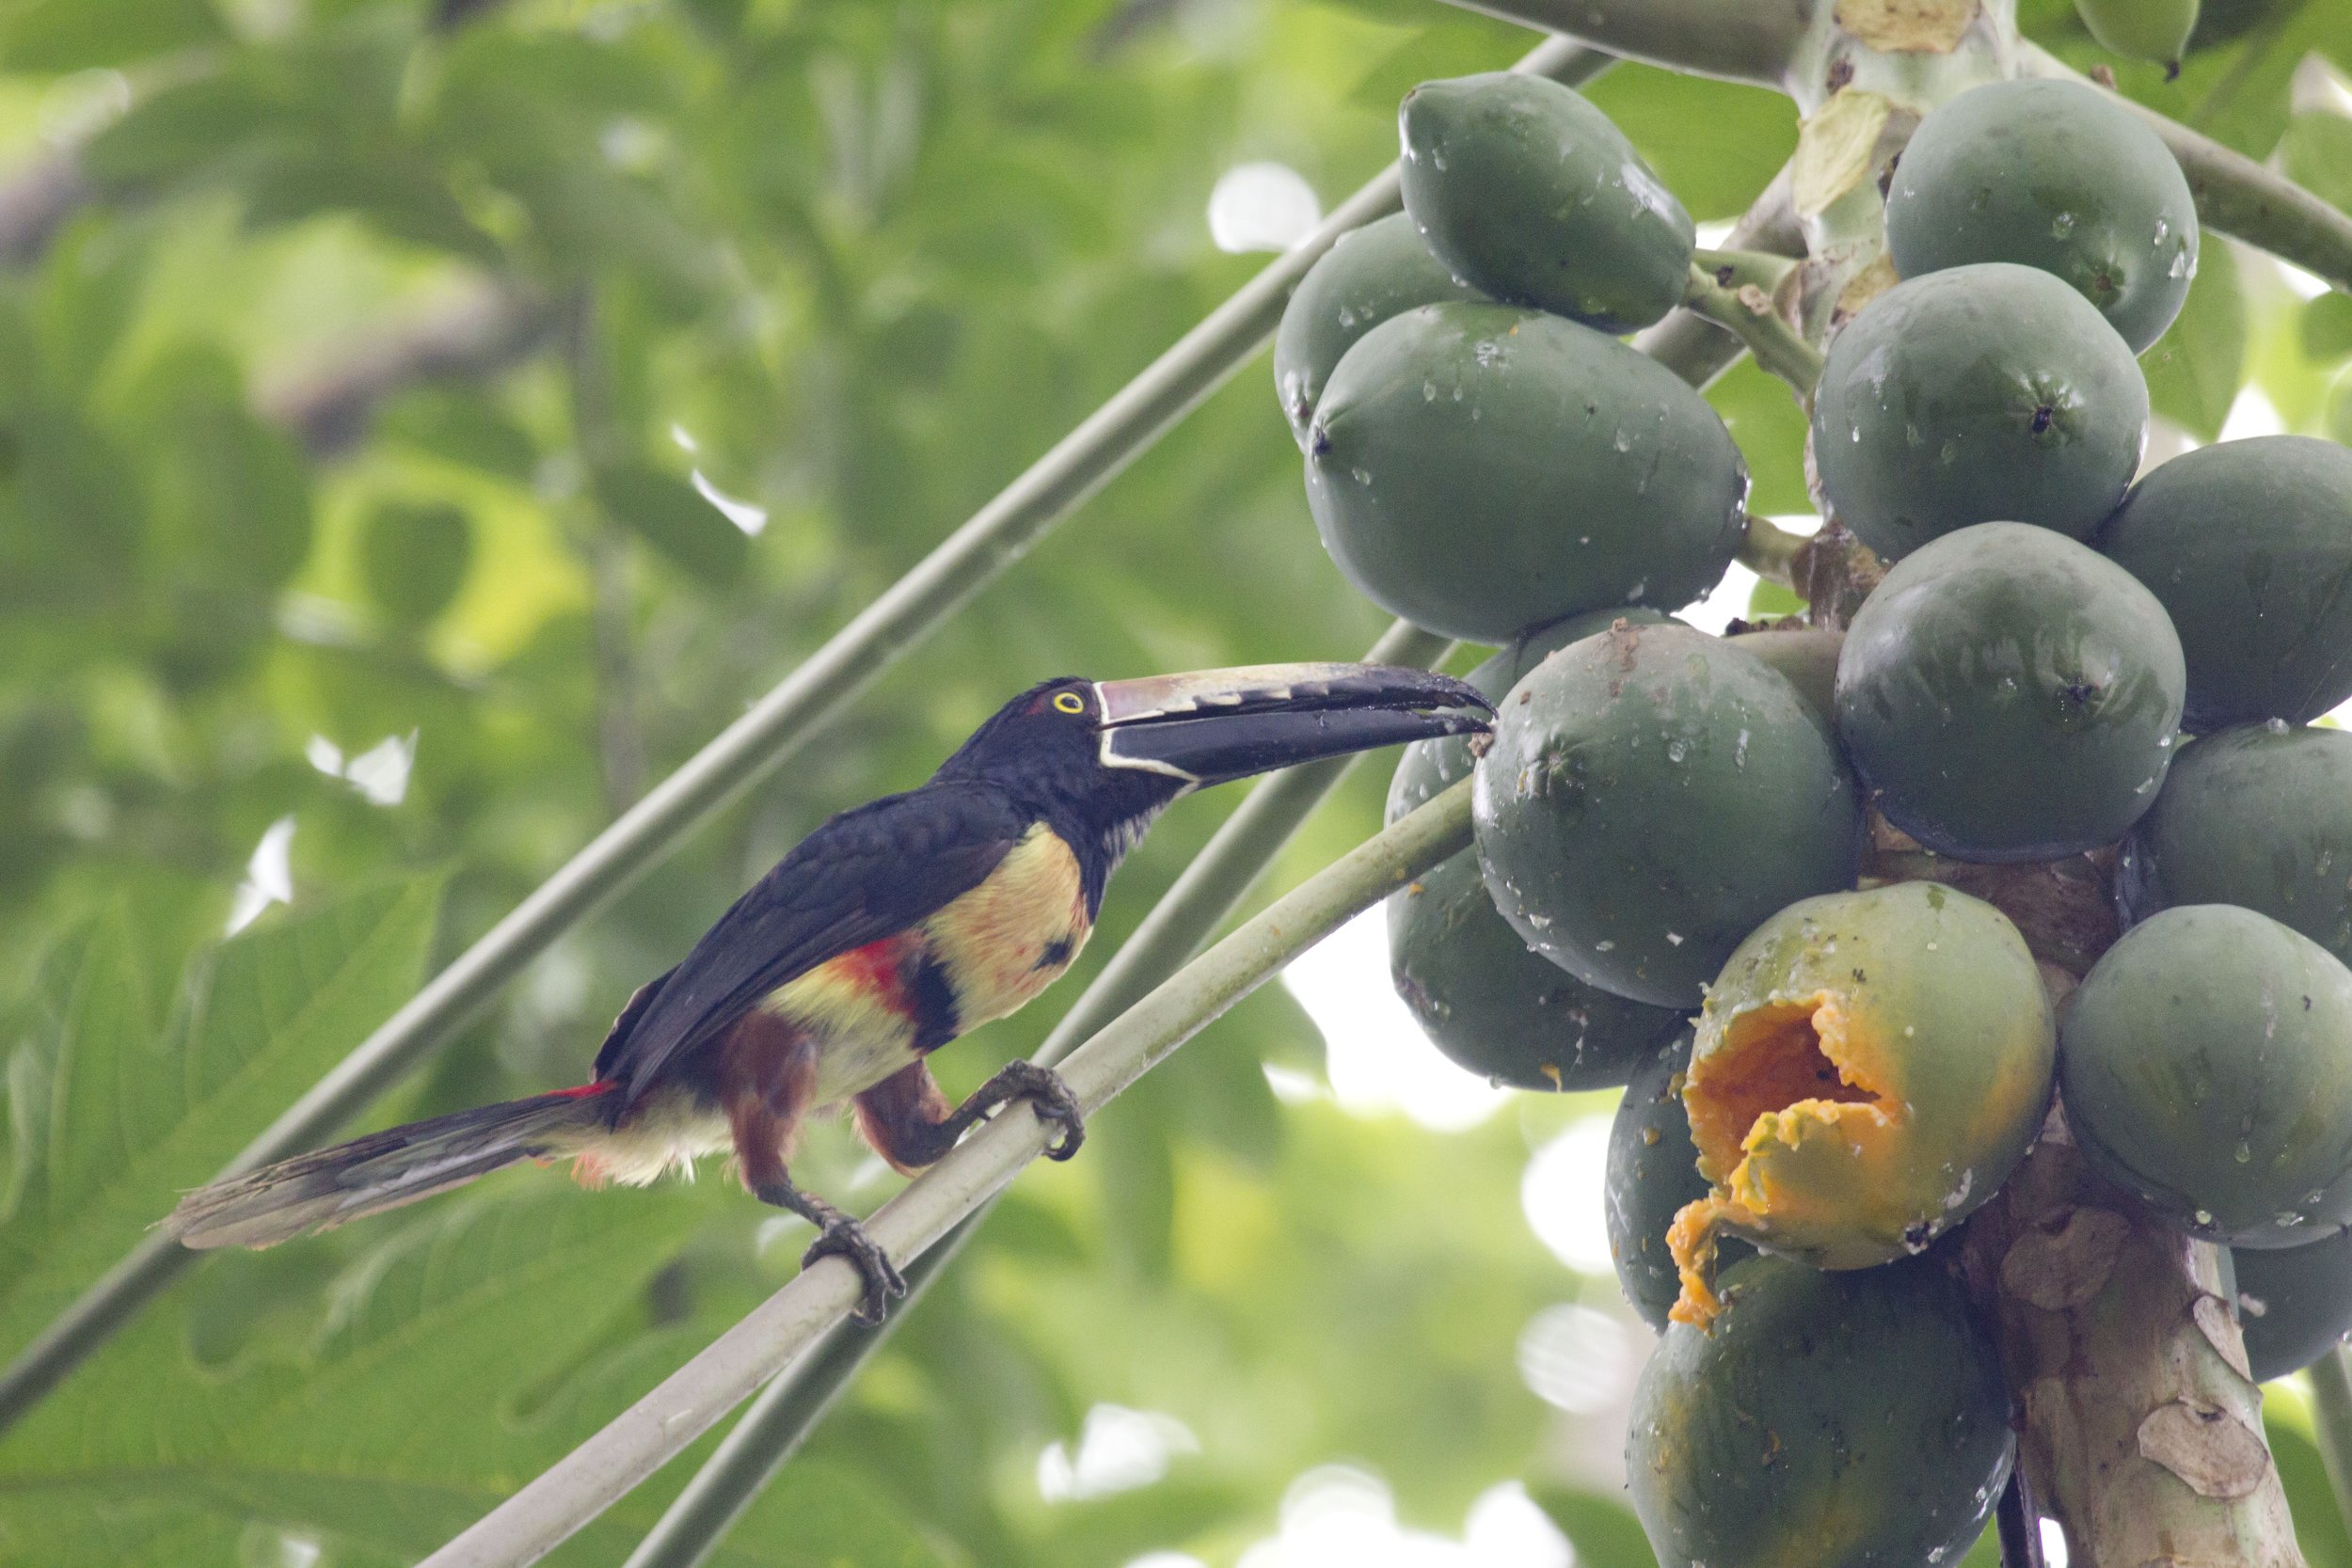 Aracari feeding on papaya